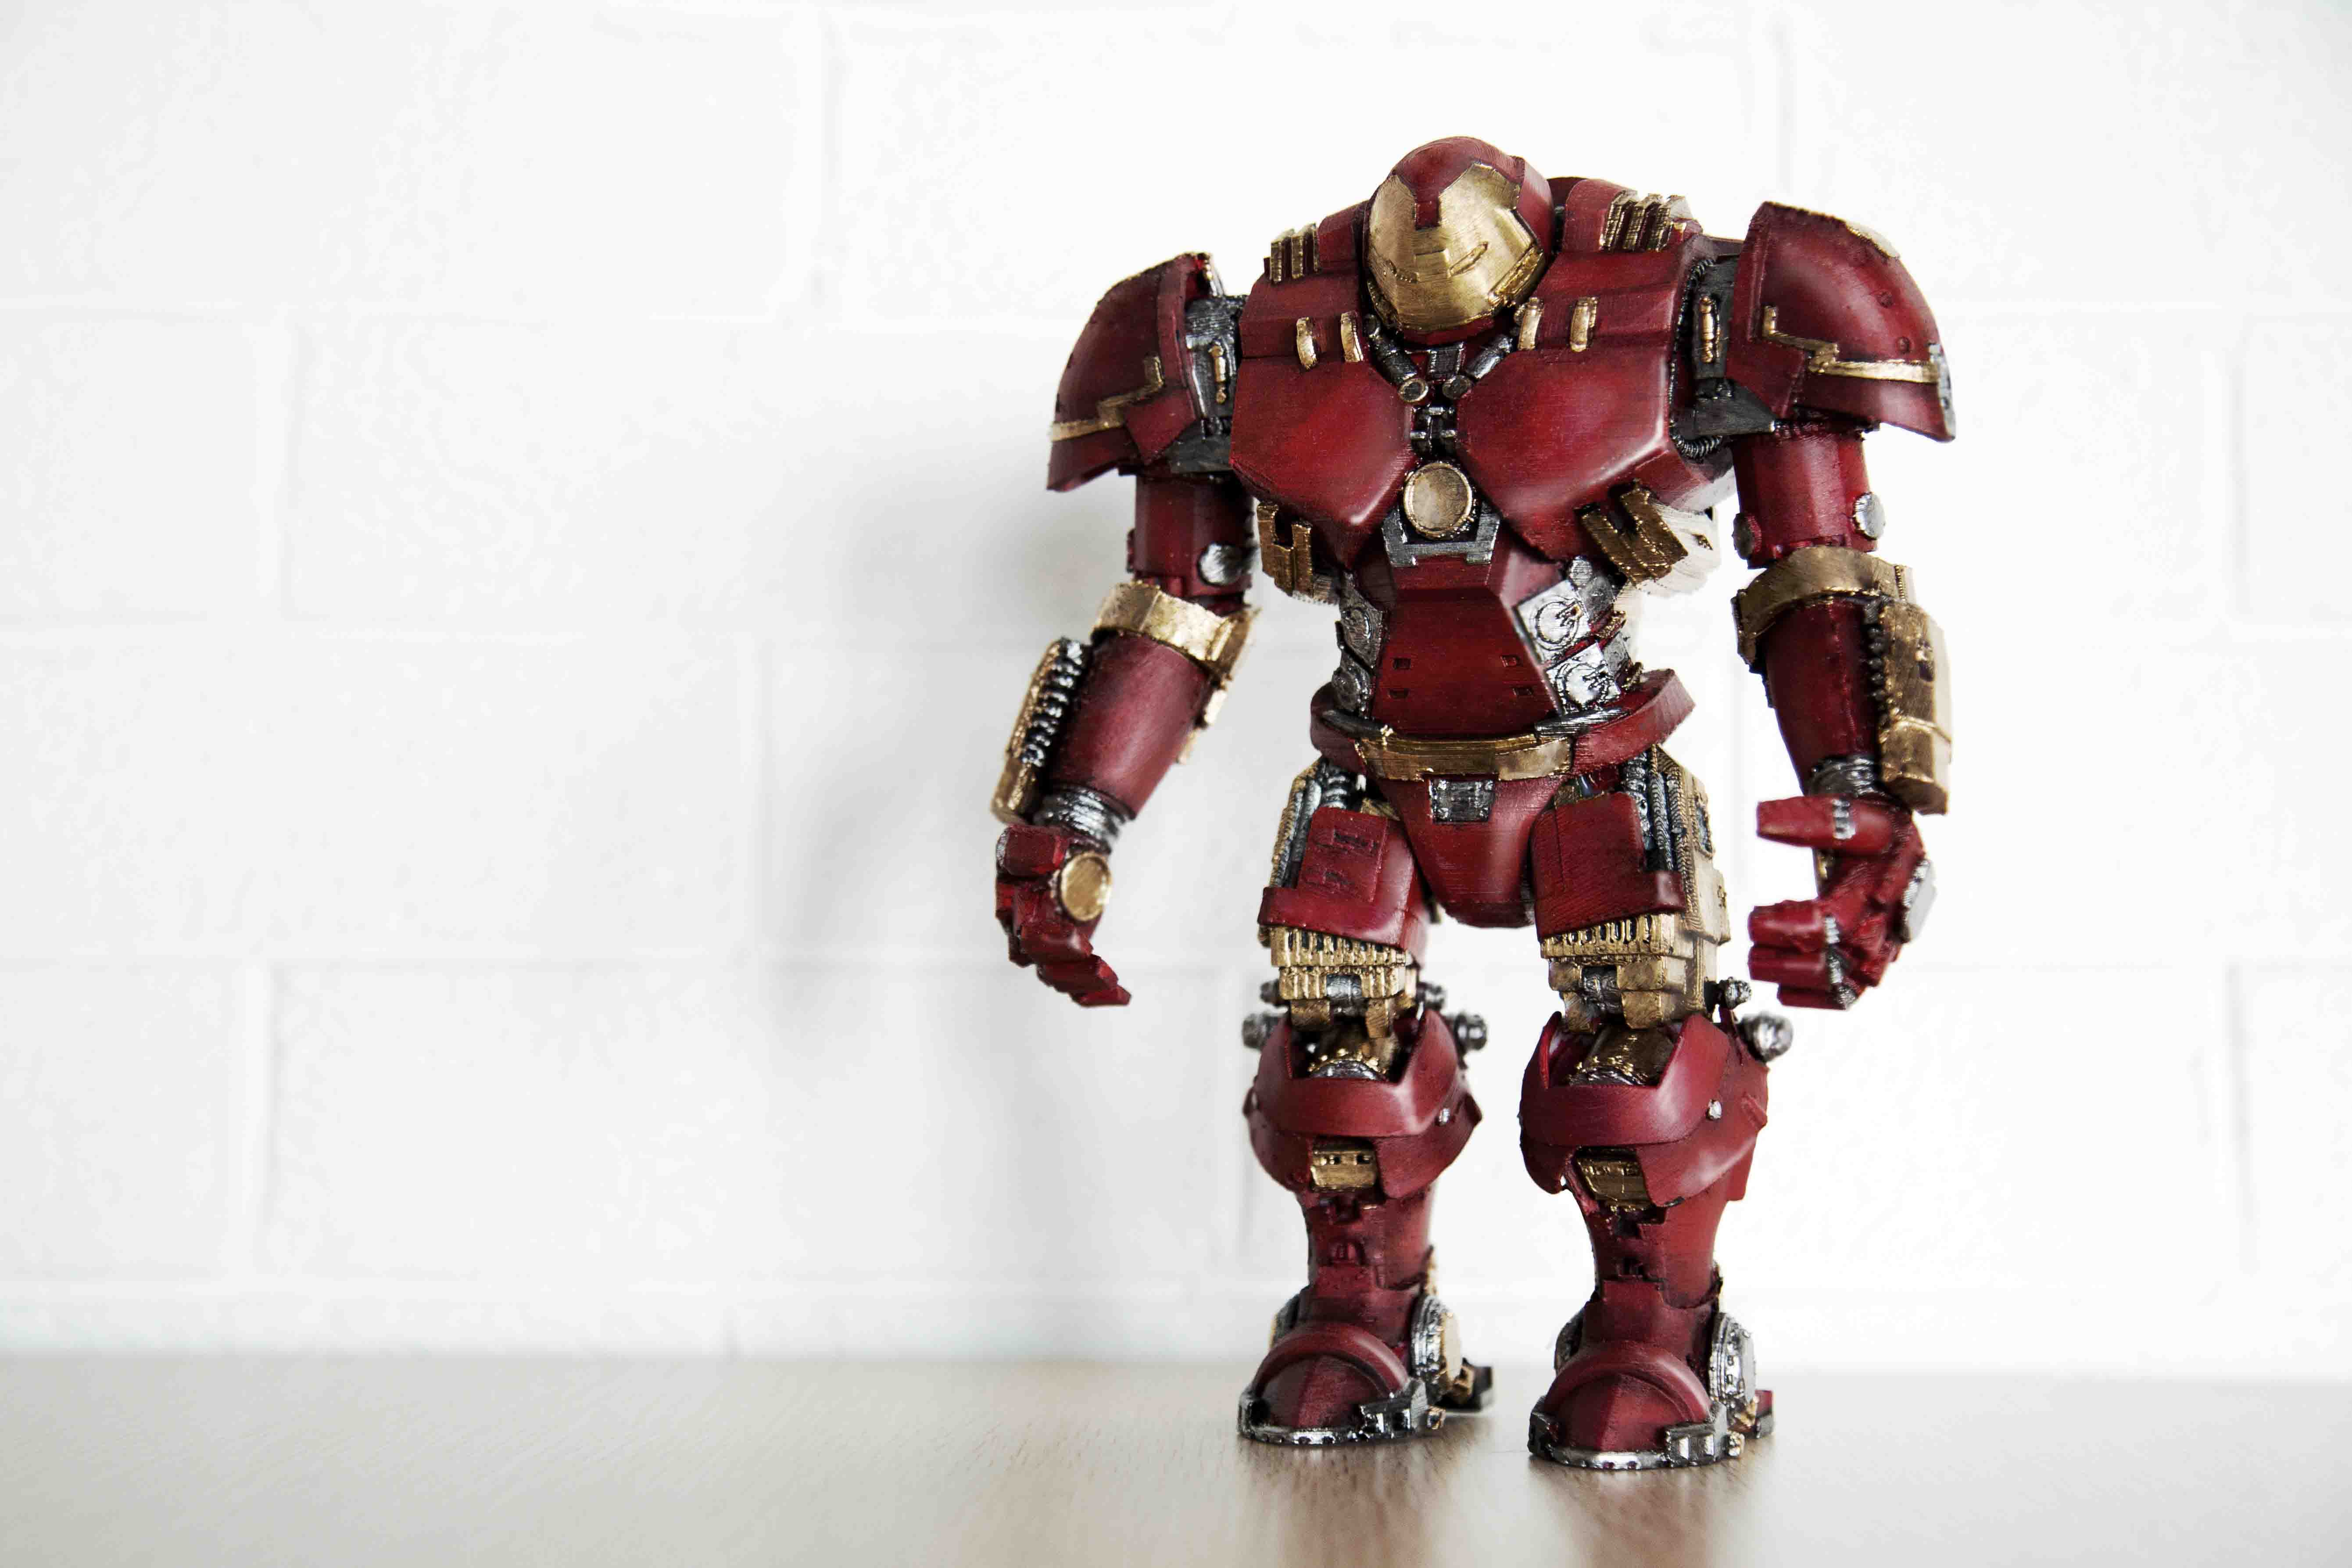 Designer 3D Prints Incredible Hulkbuster Action Figure